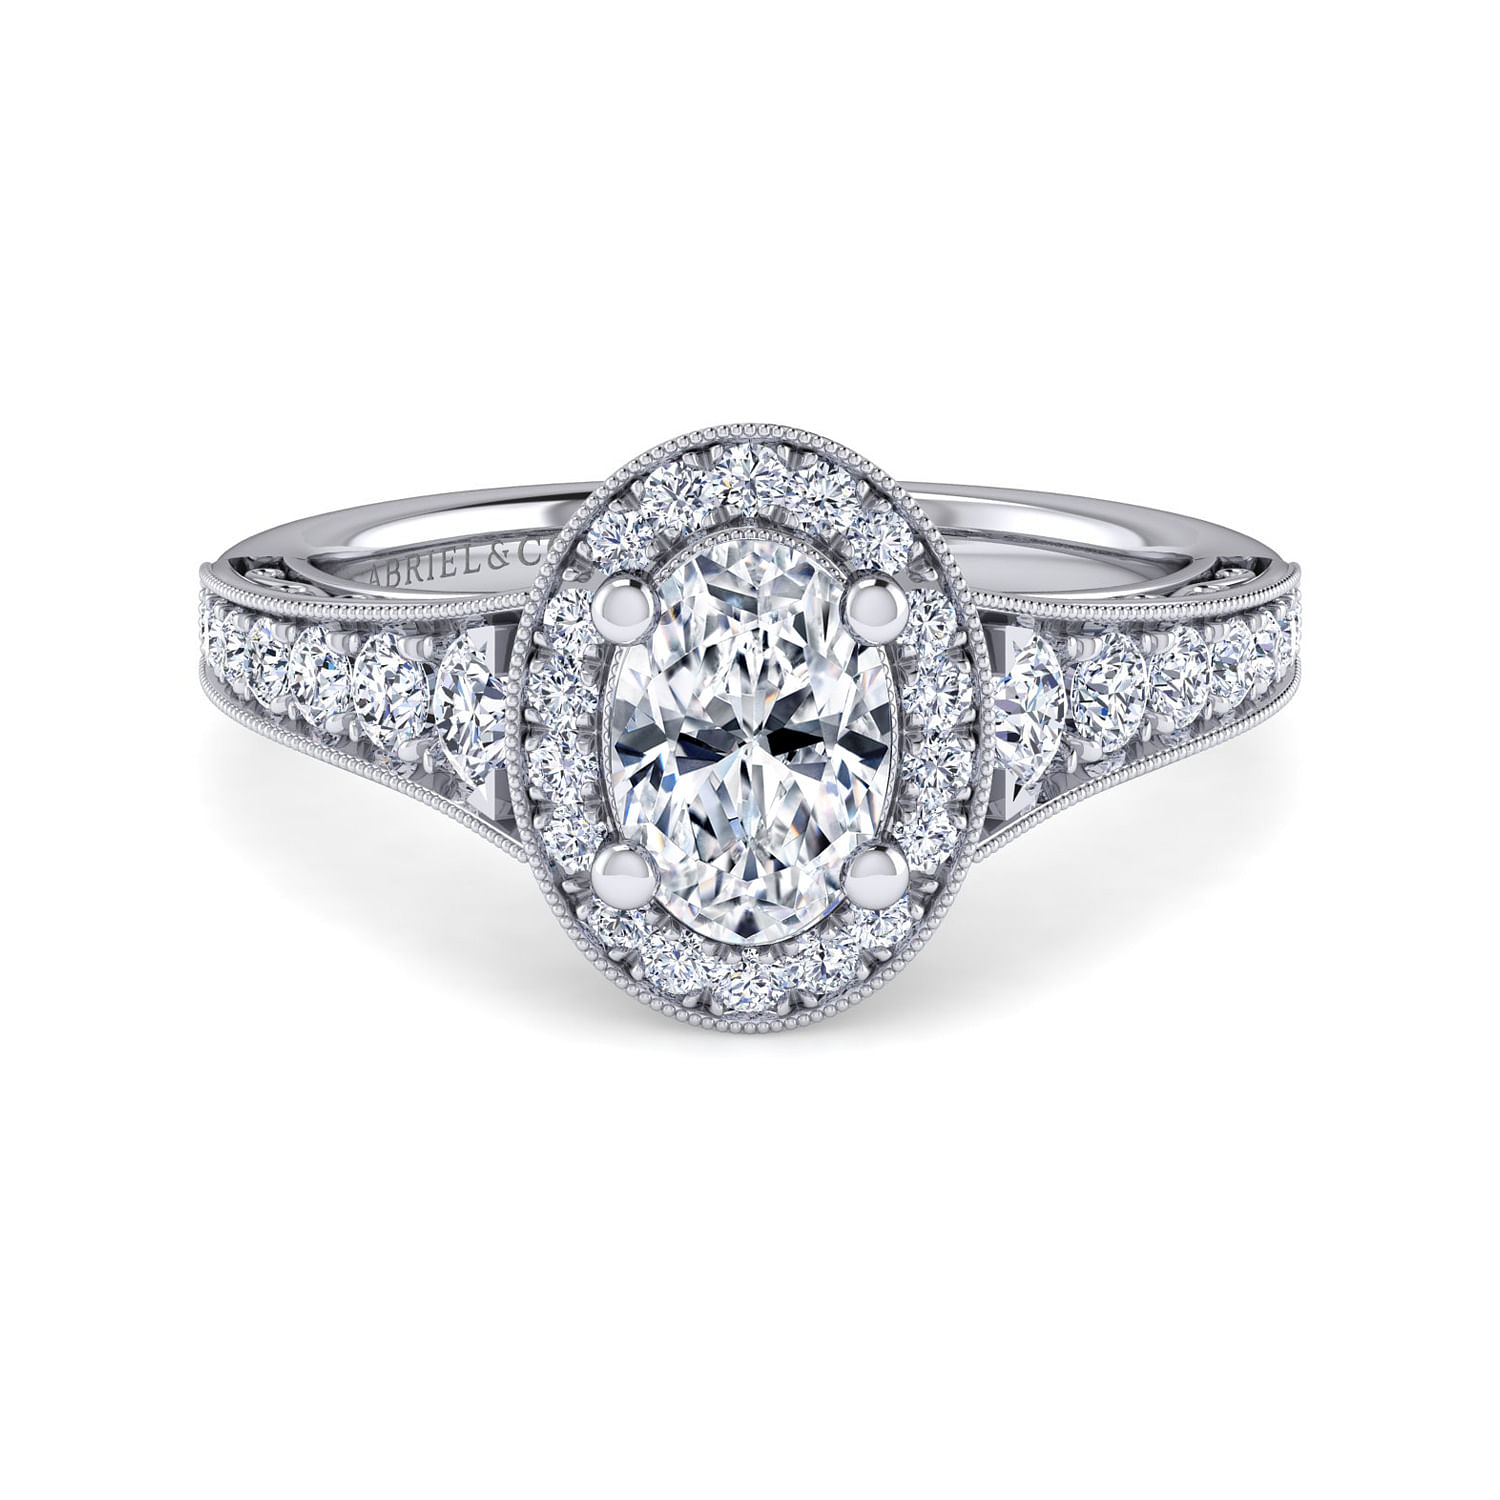 Florence - Vintage Inspired 14K White Gold Oval Halo Diamond Engagement Ring